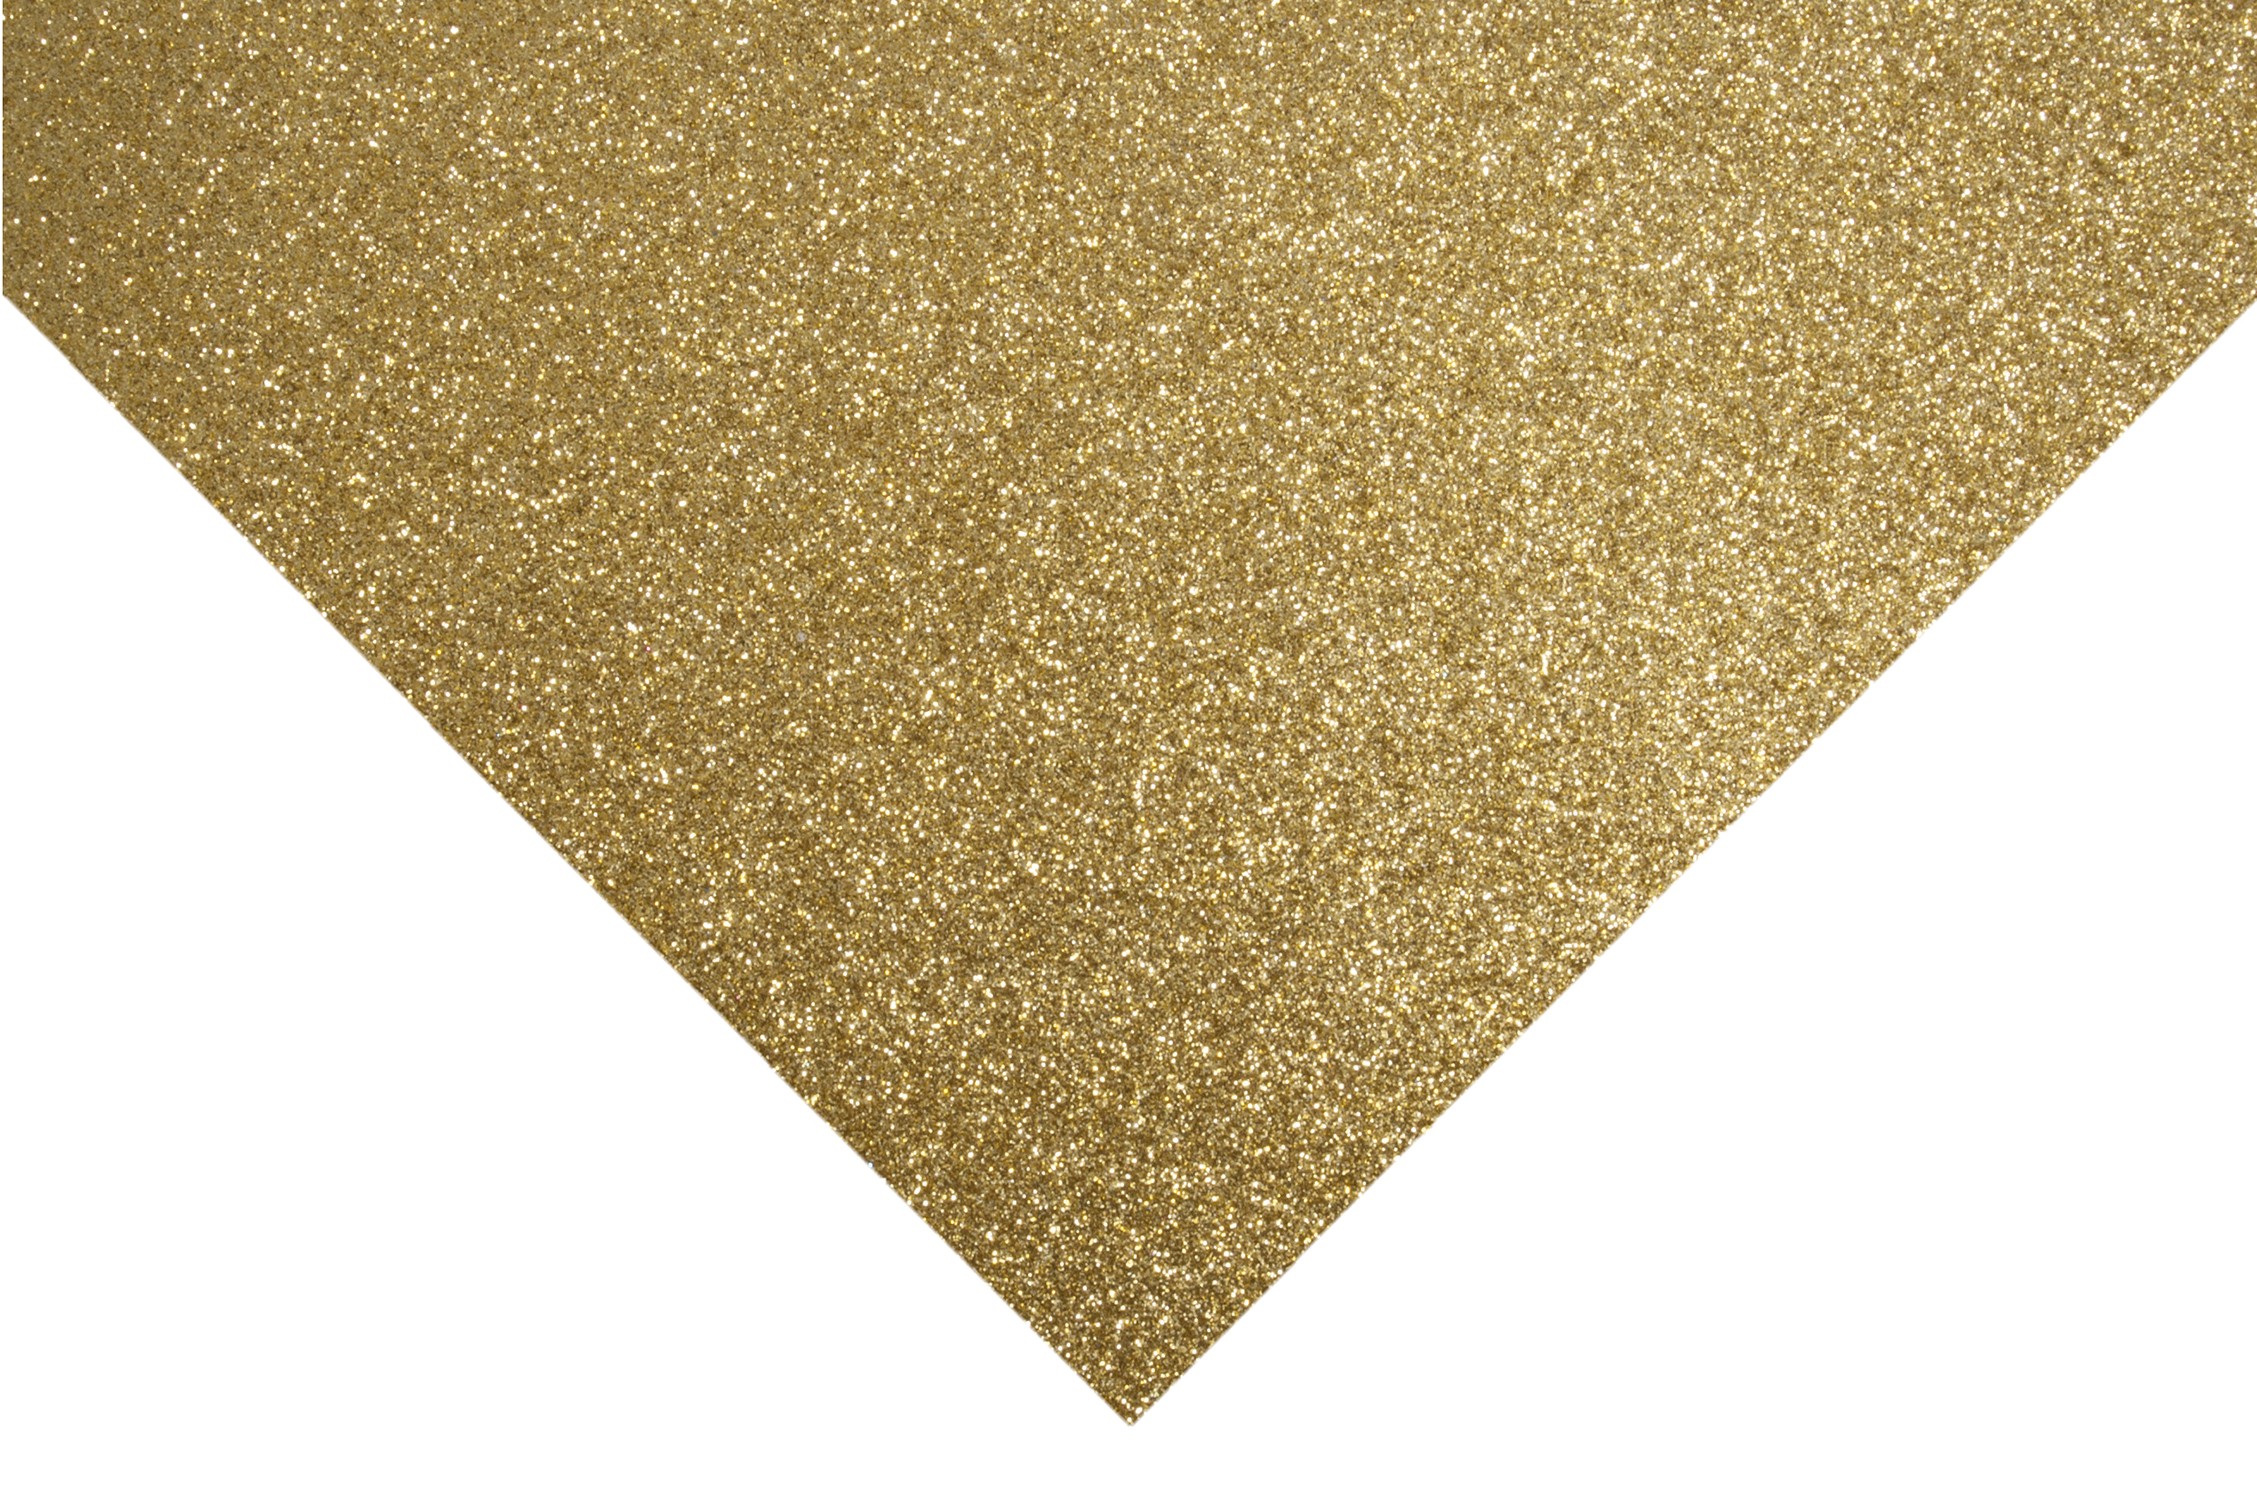 Gold Glitter Felt 23cmx30cm/9x11in - 1 piece